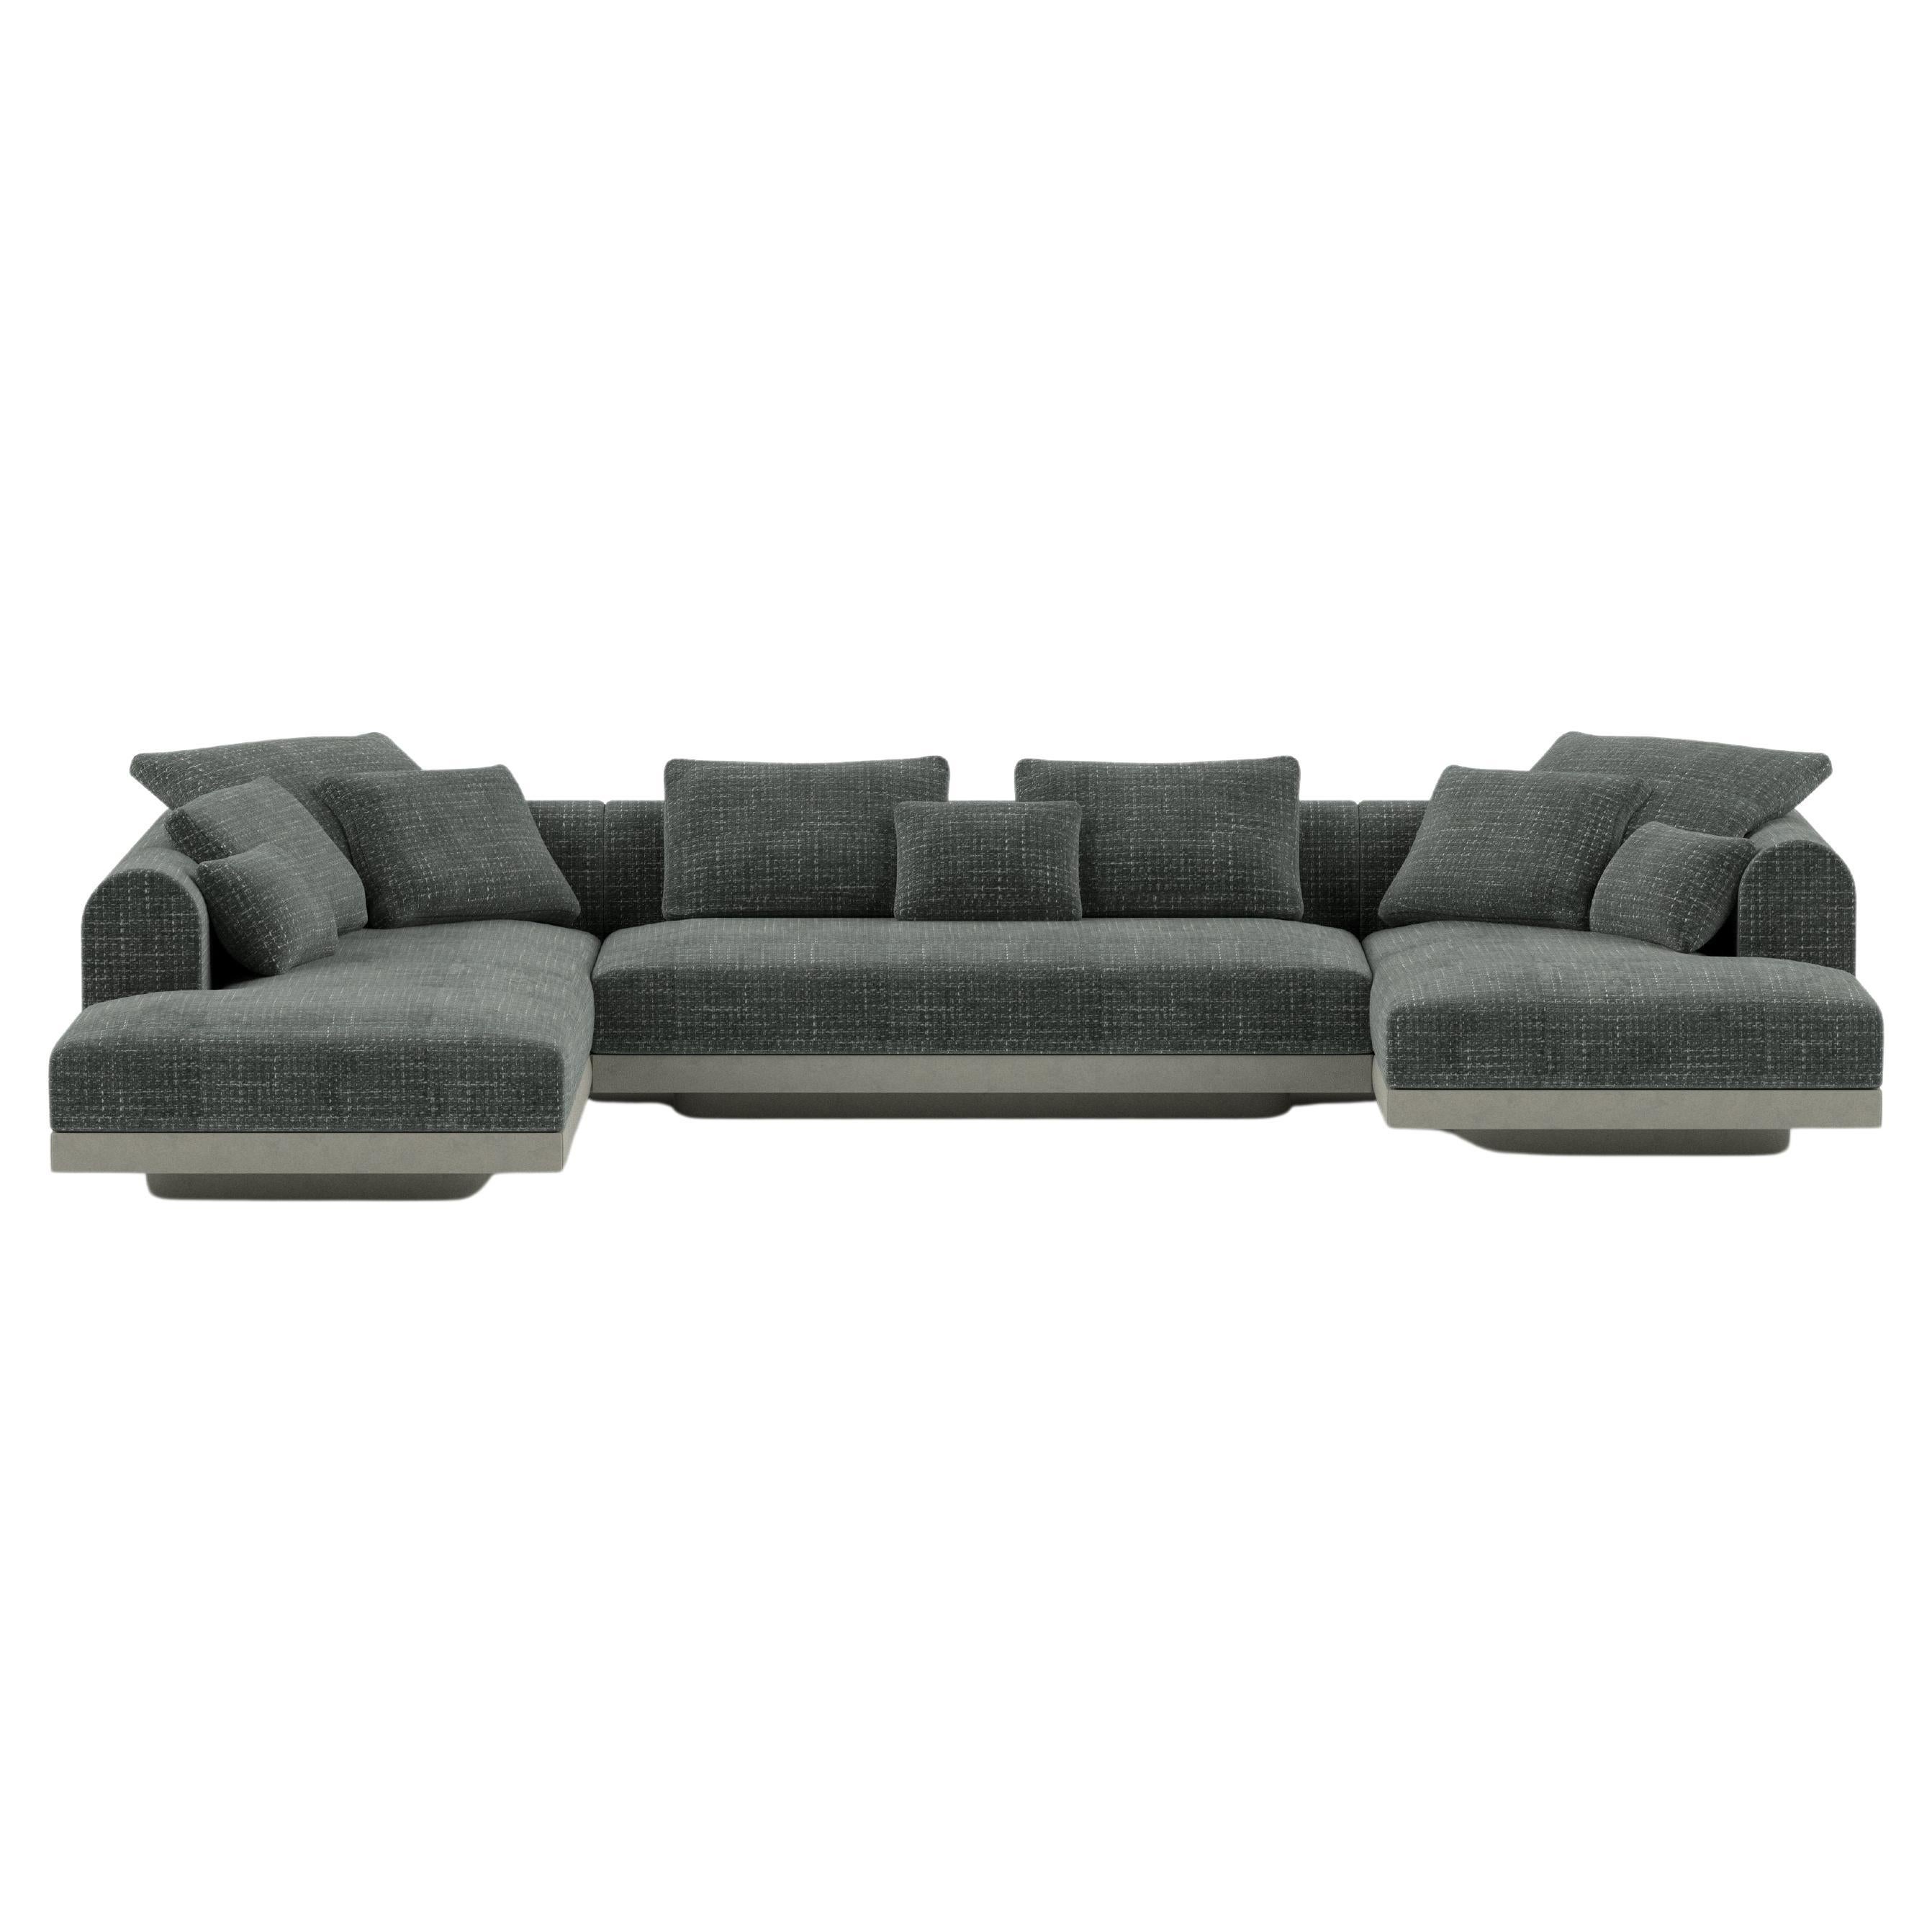 Aqueduct' Contemporary Sofa von Poiat, Setup 4, Yang 95, HIgh Plinth im Angebot